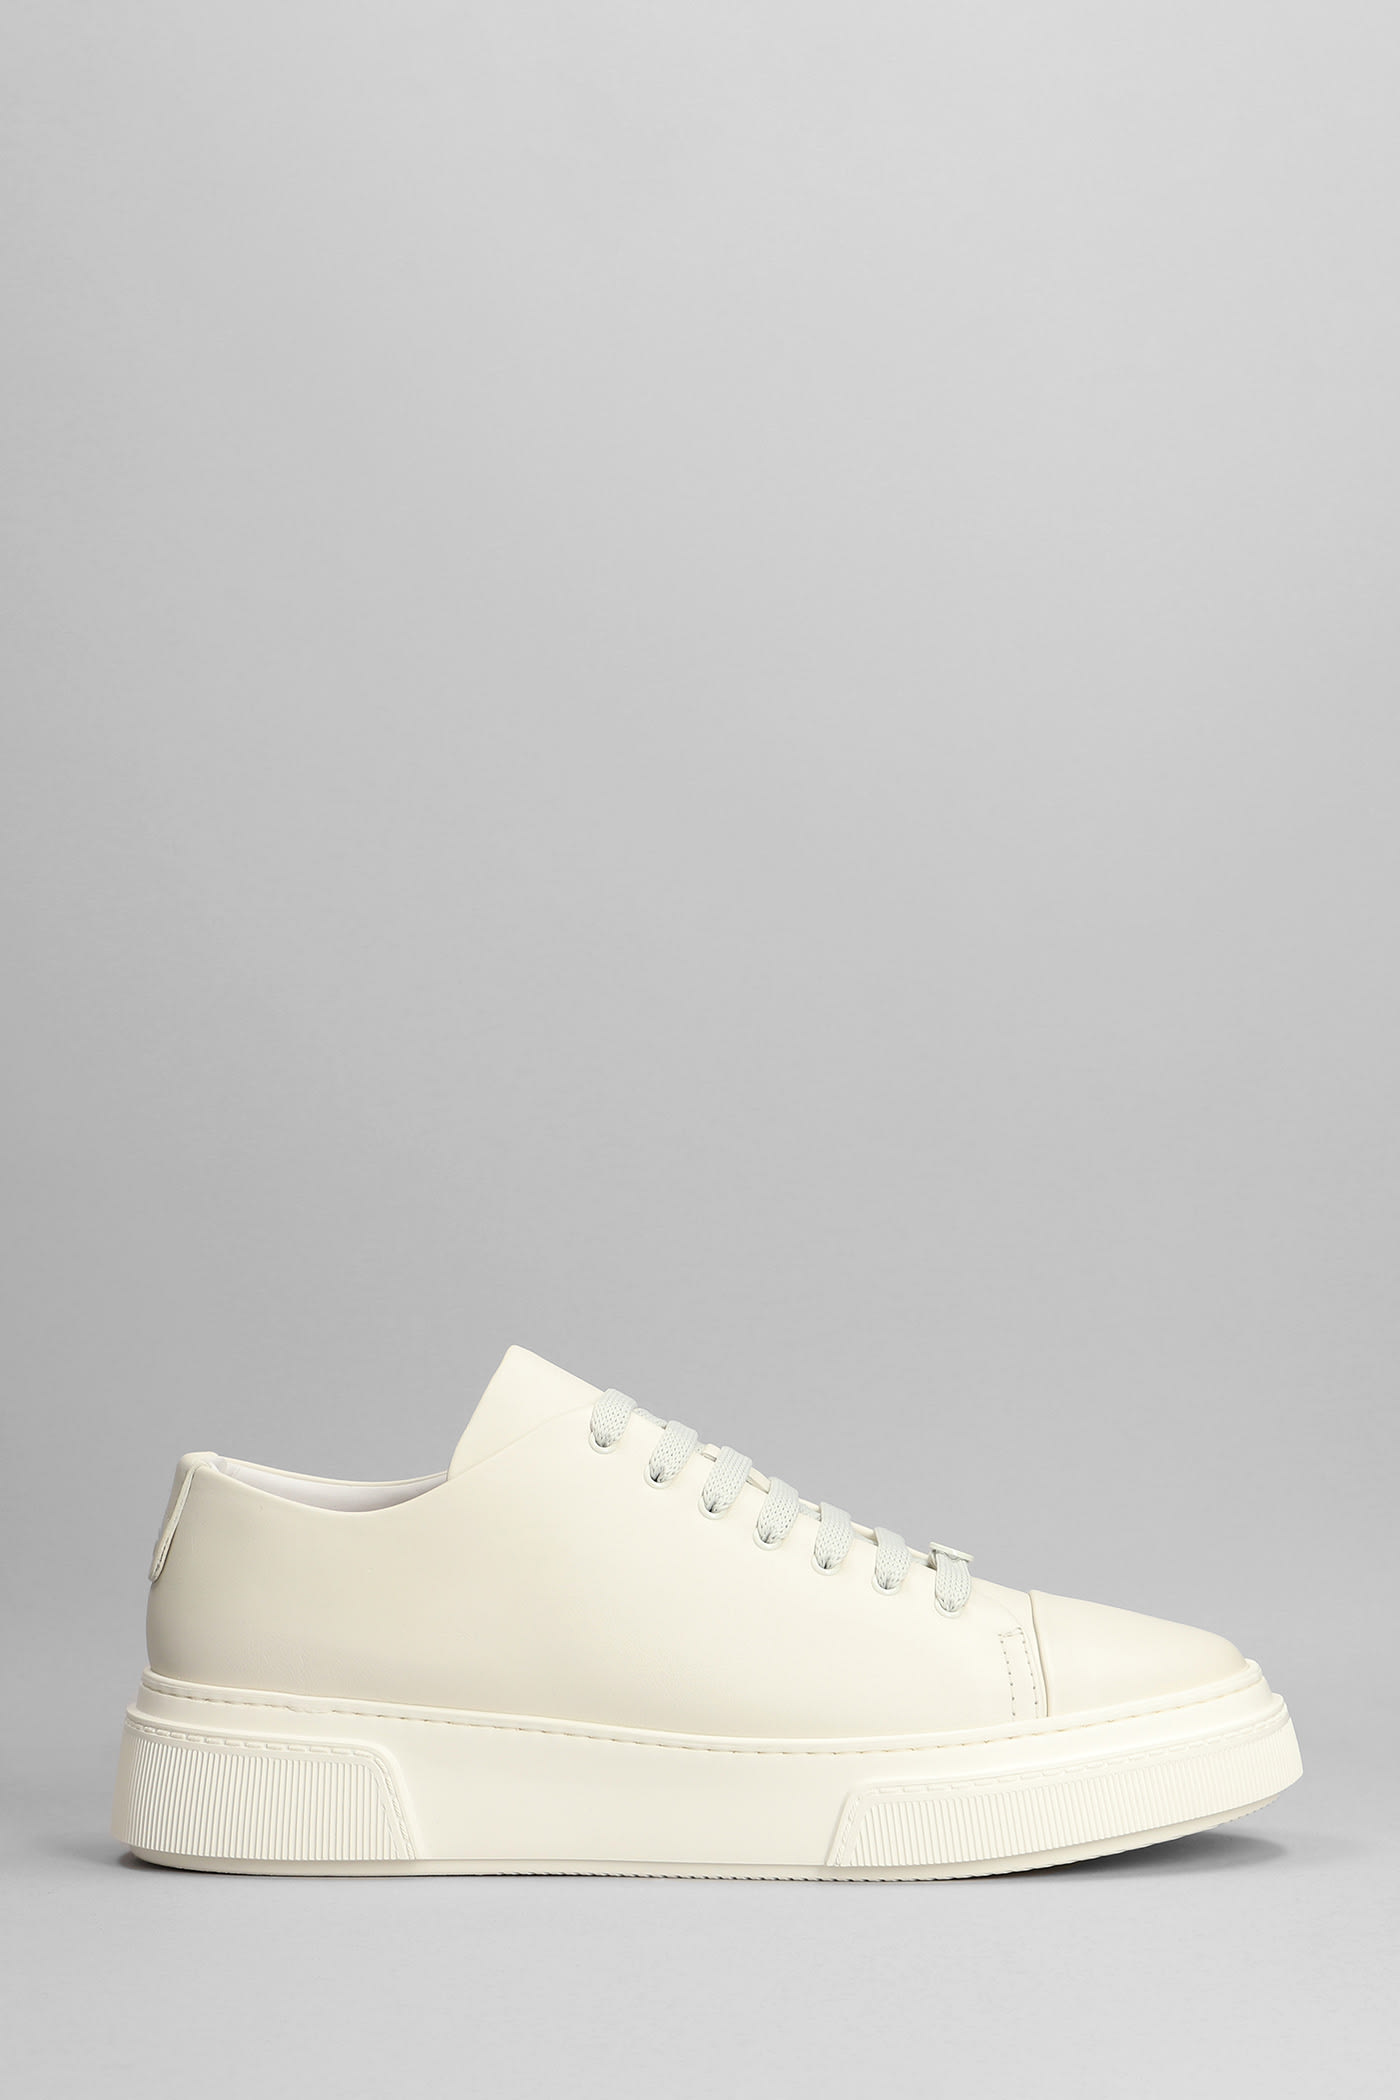 Giorgio Armani Sneakers Sneakers In White Leather